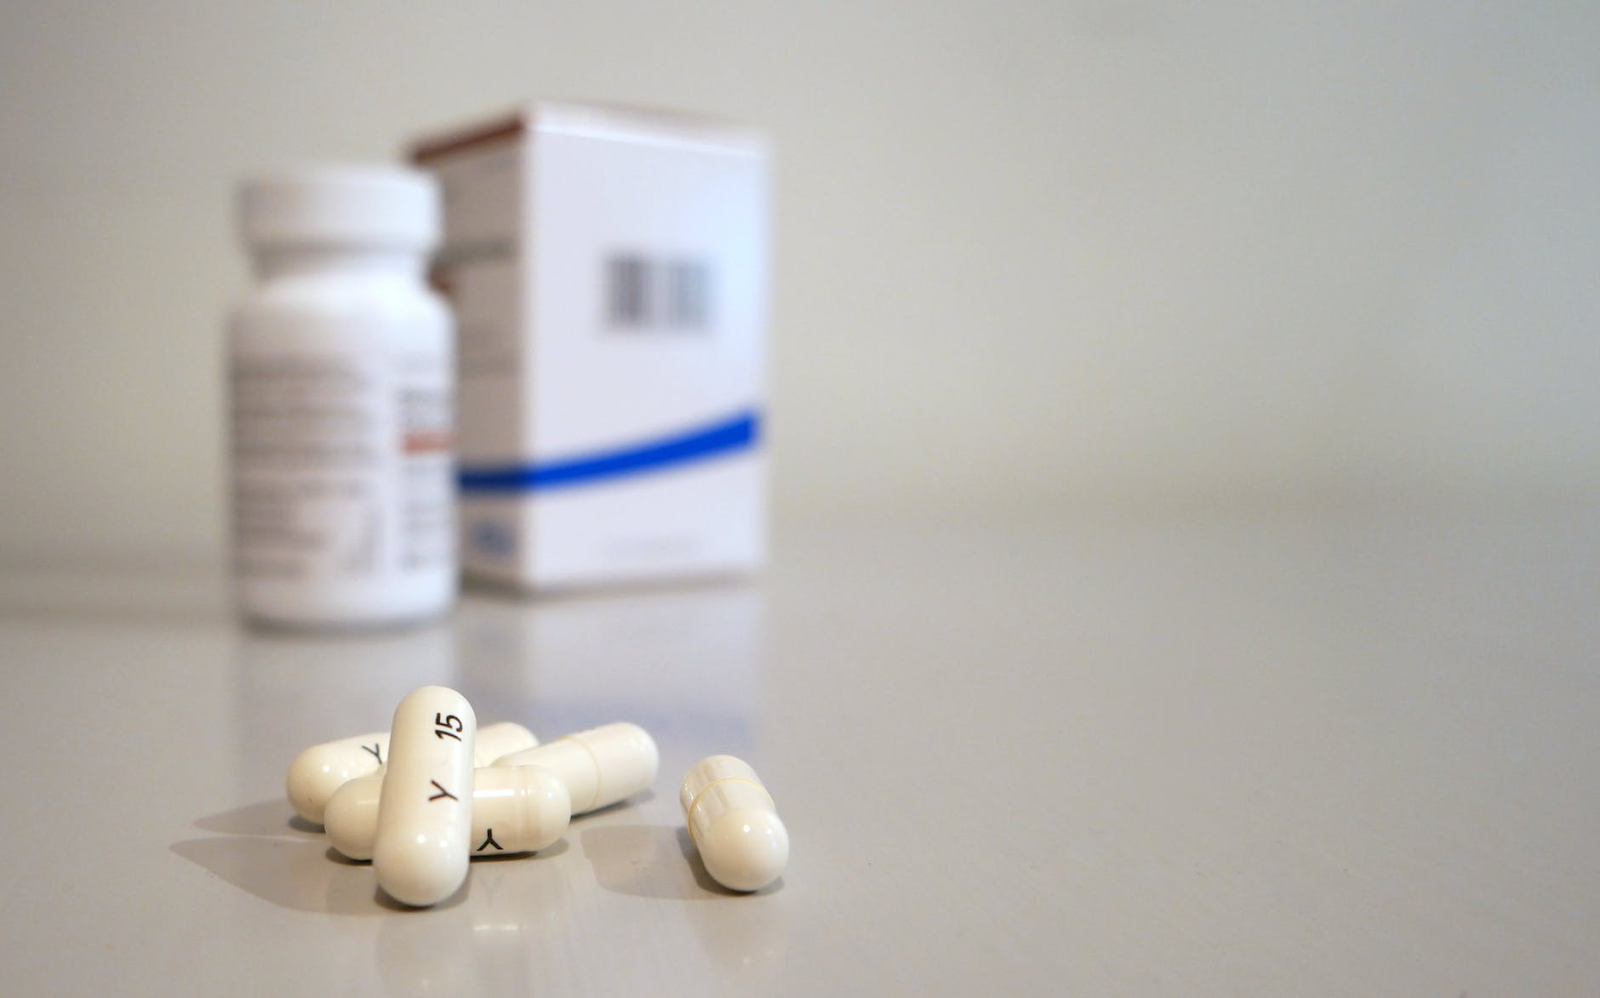 A bottle of prescription fentanyl tablets